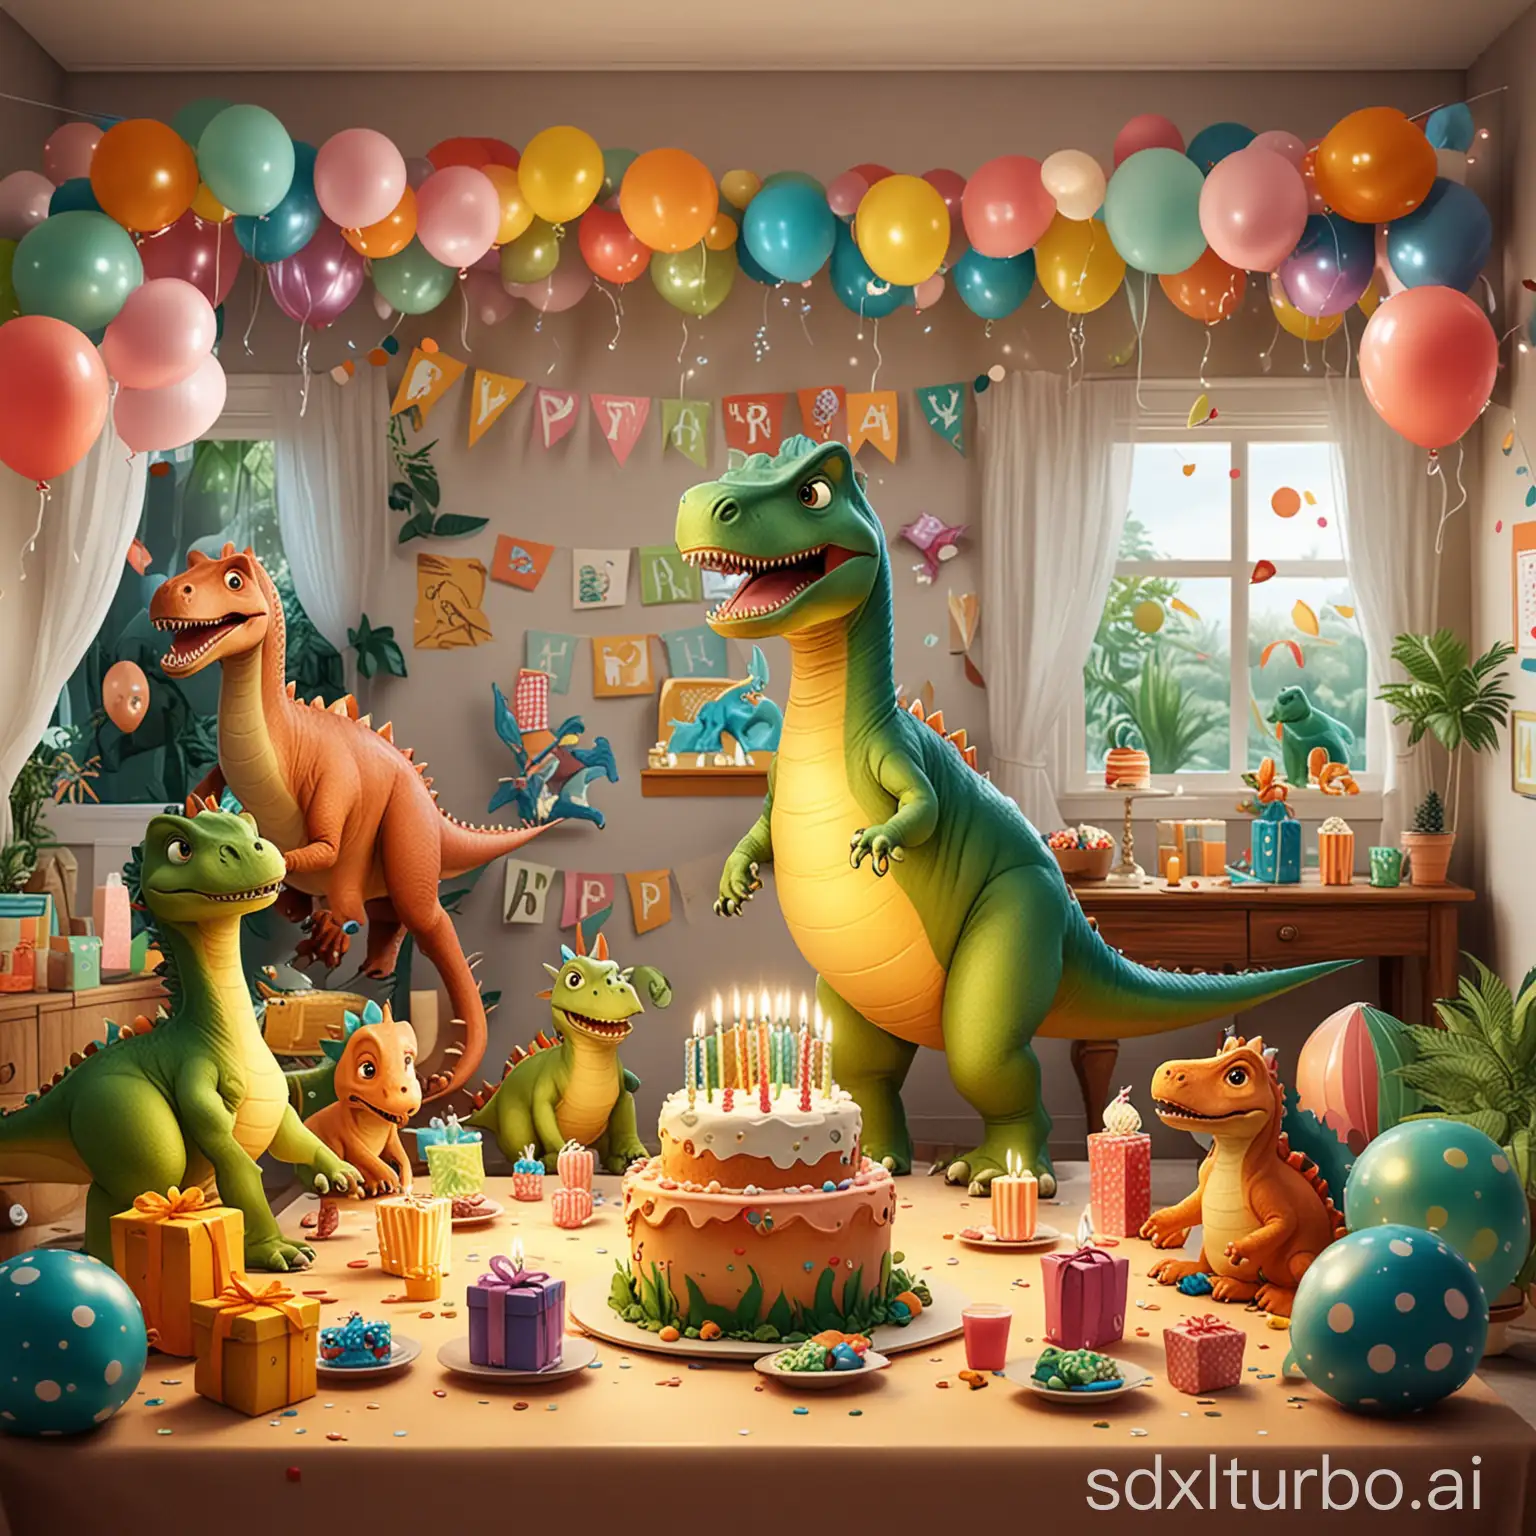 Cartoon dinosaur-themed children's birthday scene